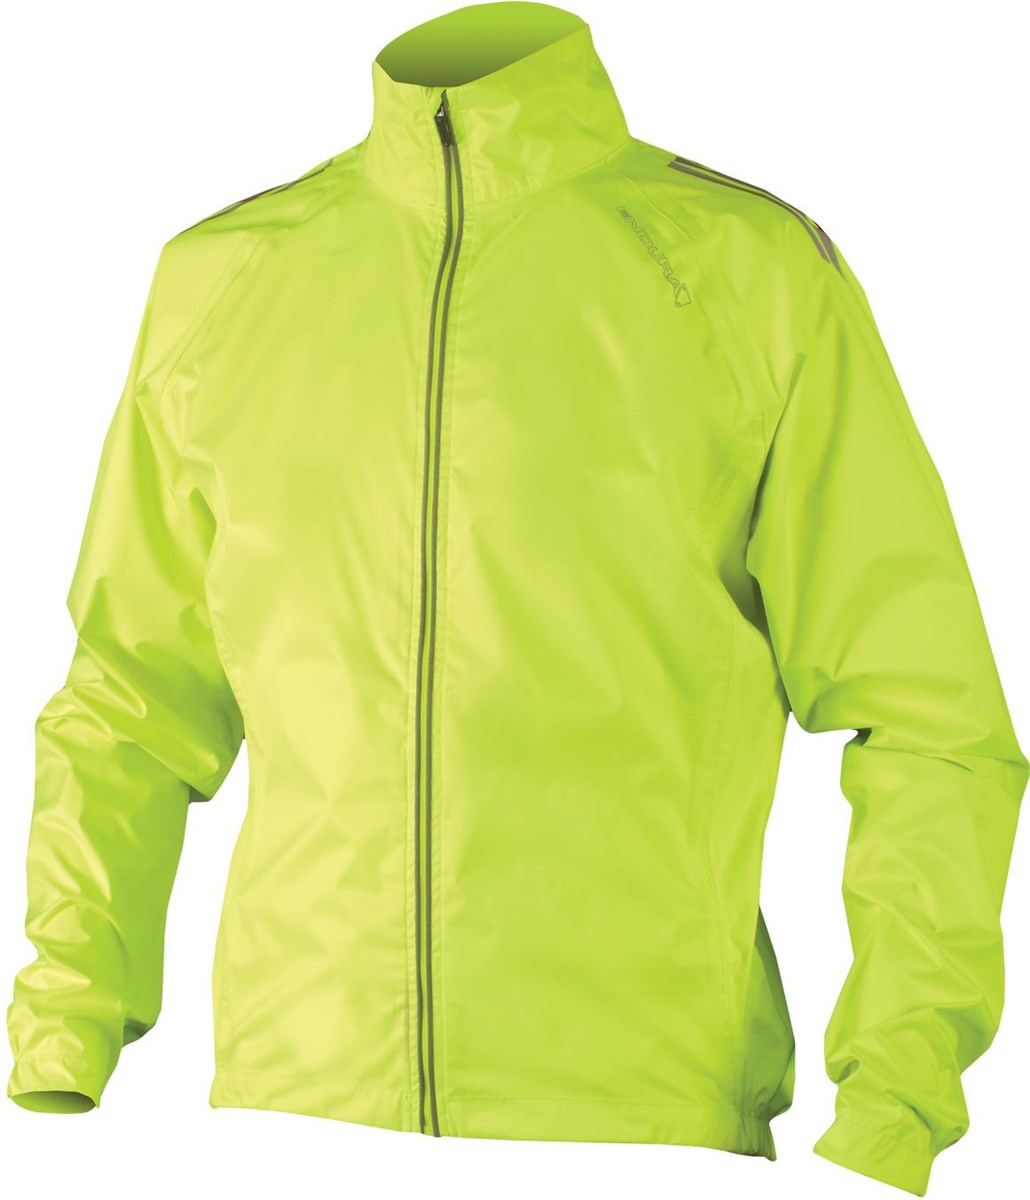 Endura Photon Waterproof Cycling Jacket SS16 product image